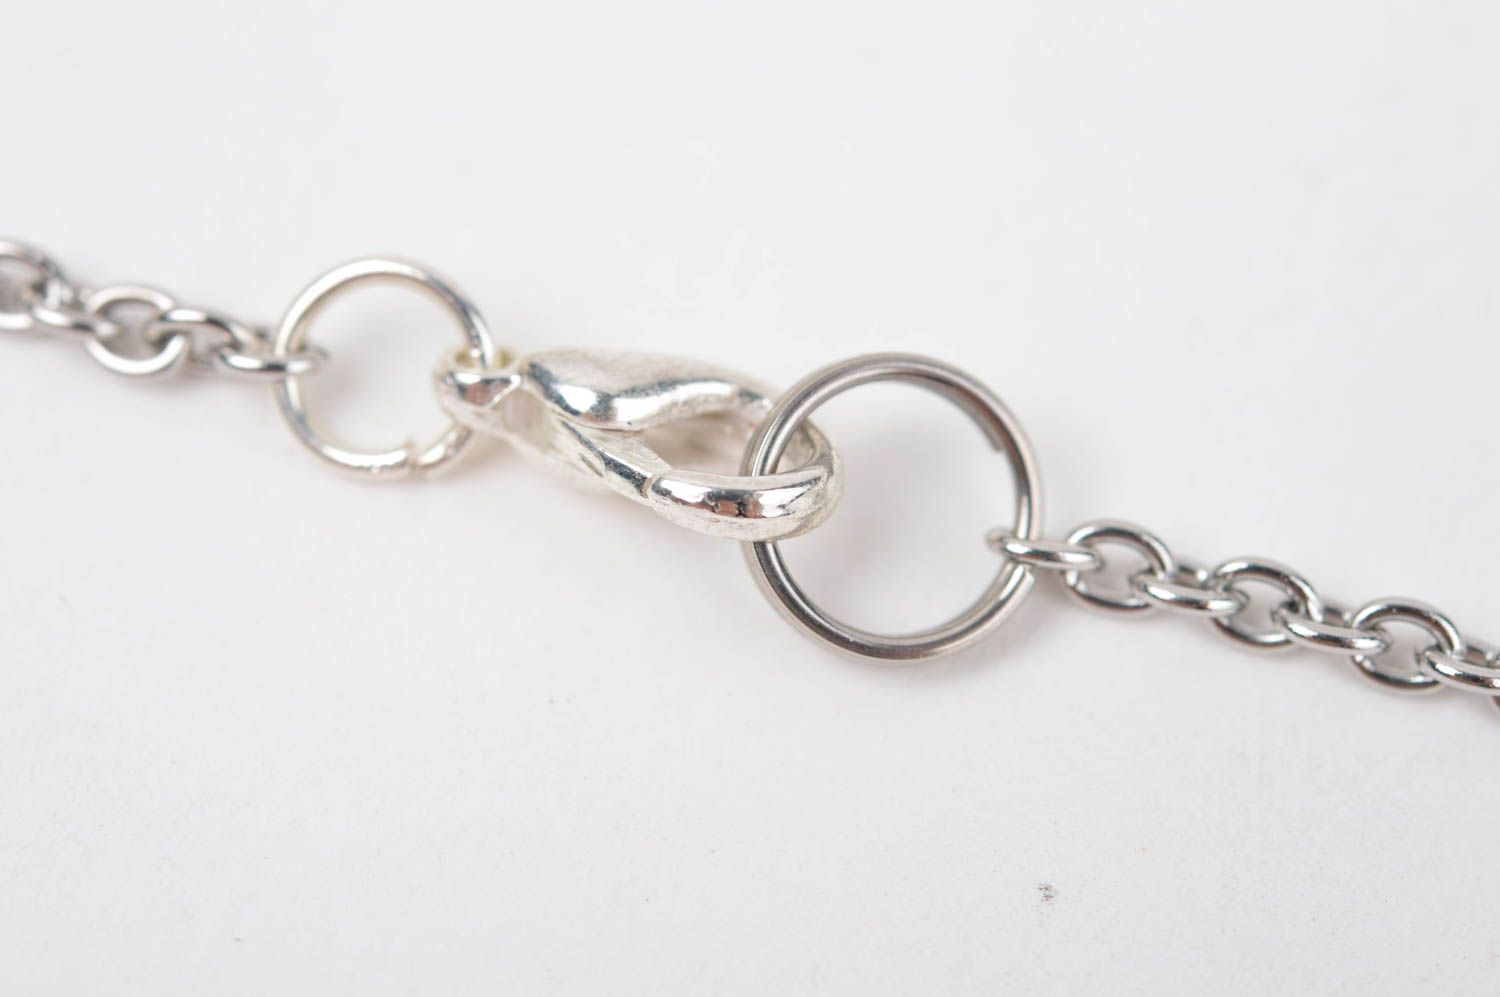 Handmade pendant designer accessory unusual jewelry gift ideas gift for women photo 3